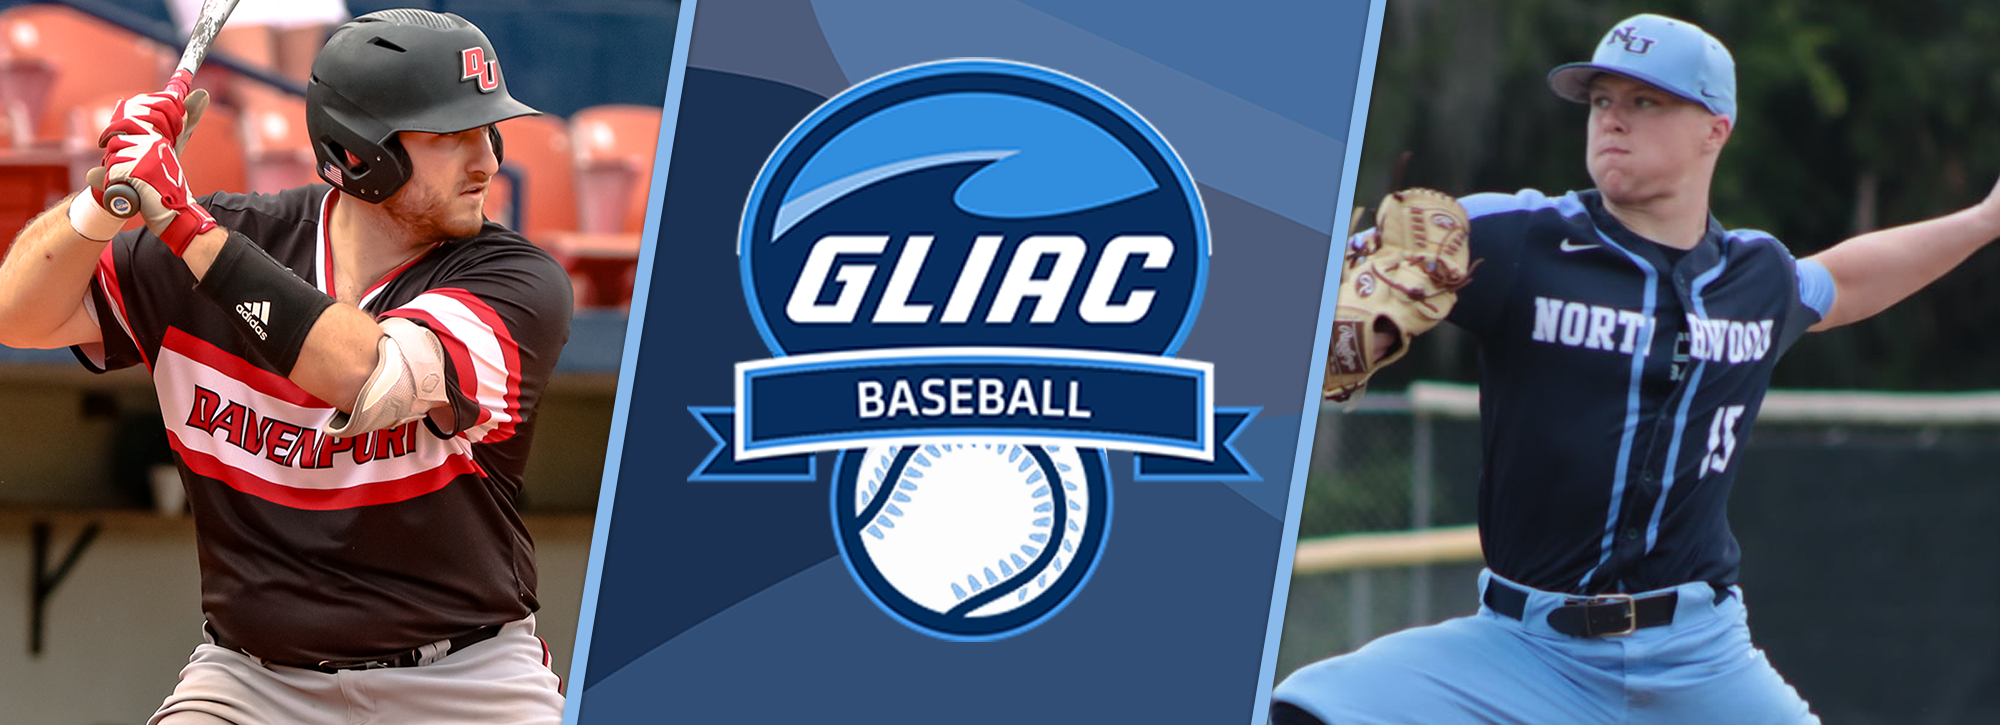 DU's Eby and NU's Clark receive GLIAC baseball weekly accolades